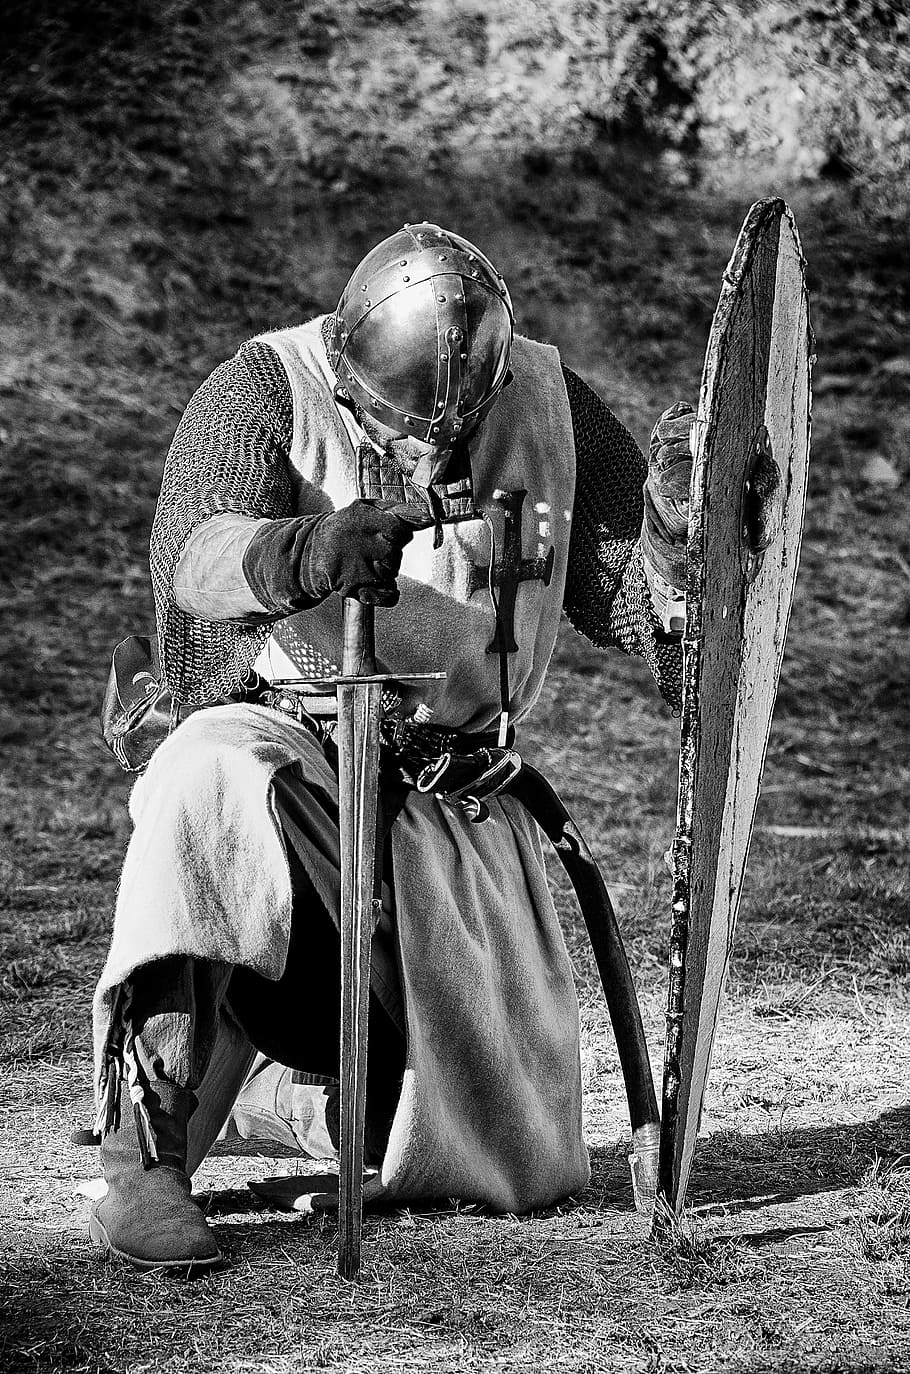 medieval sword fighting stances